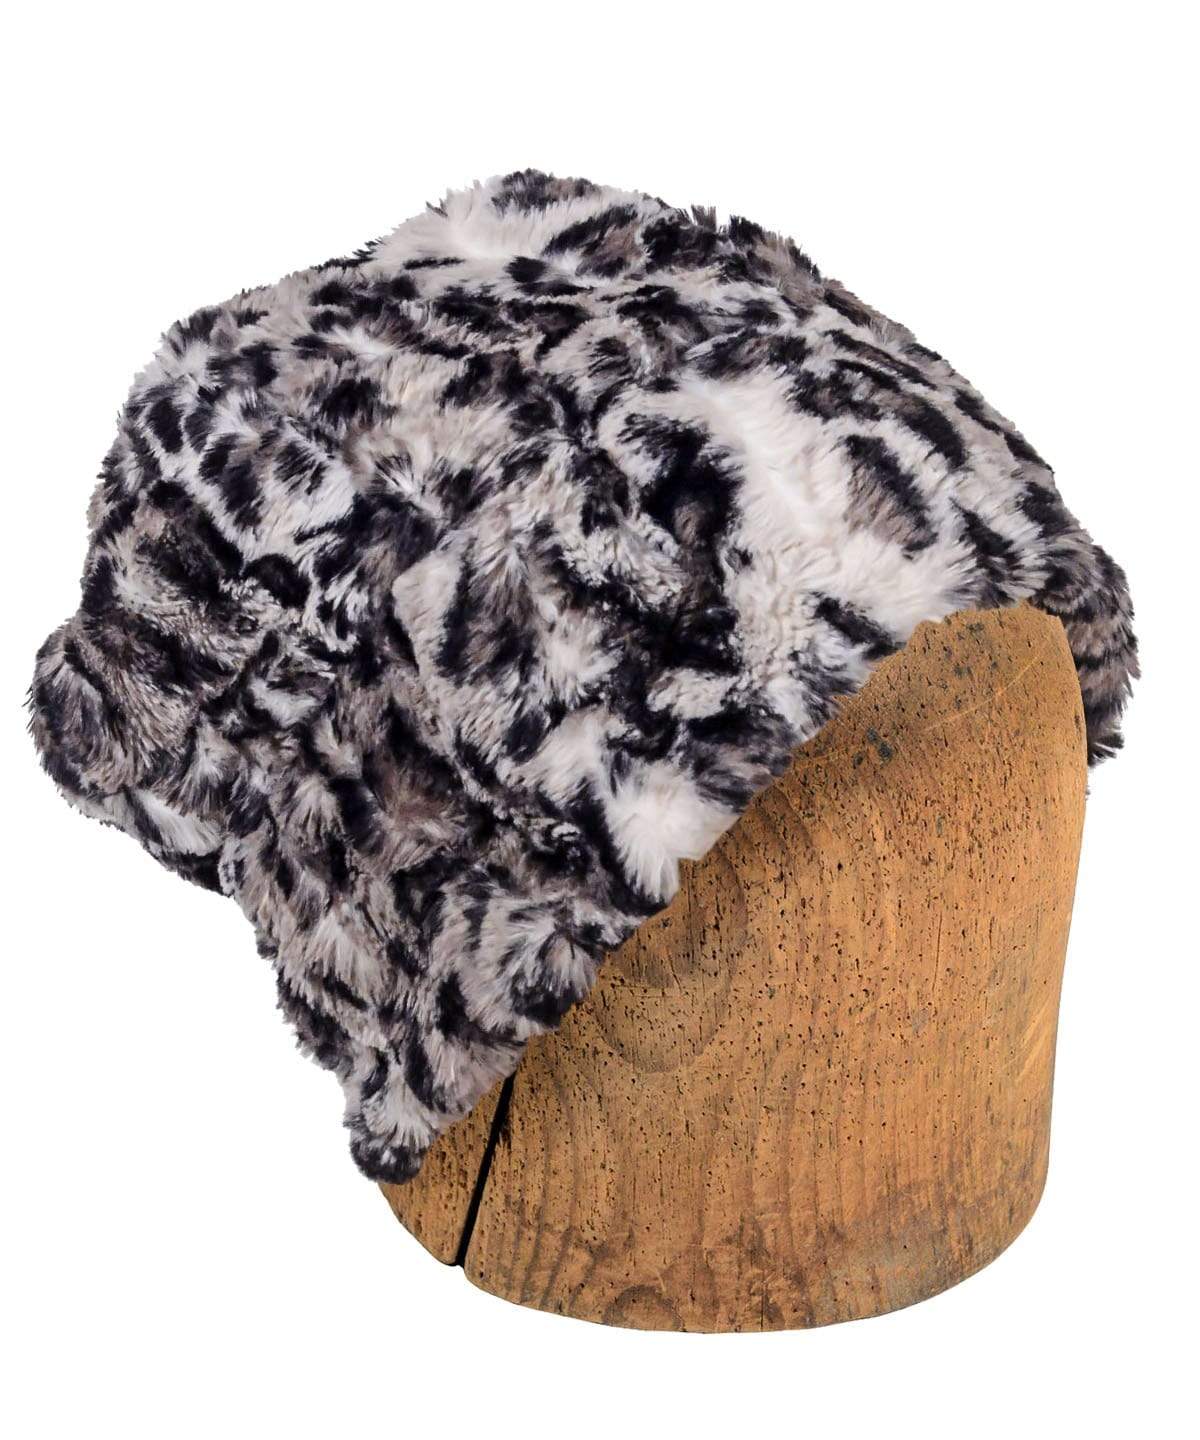 Men's Beanie Hat with Gray Pom | Savannah Cat Gray and Black Animal PrintFaux Fur | Handmade in the USA by Pandemonium Seattle